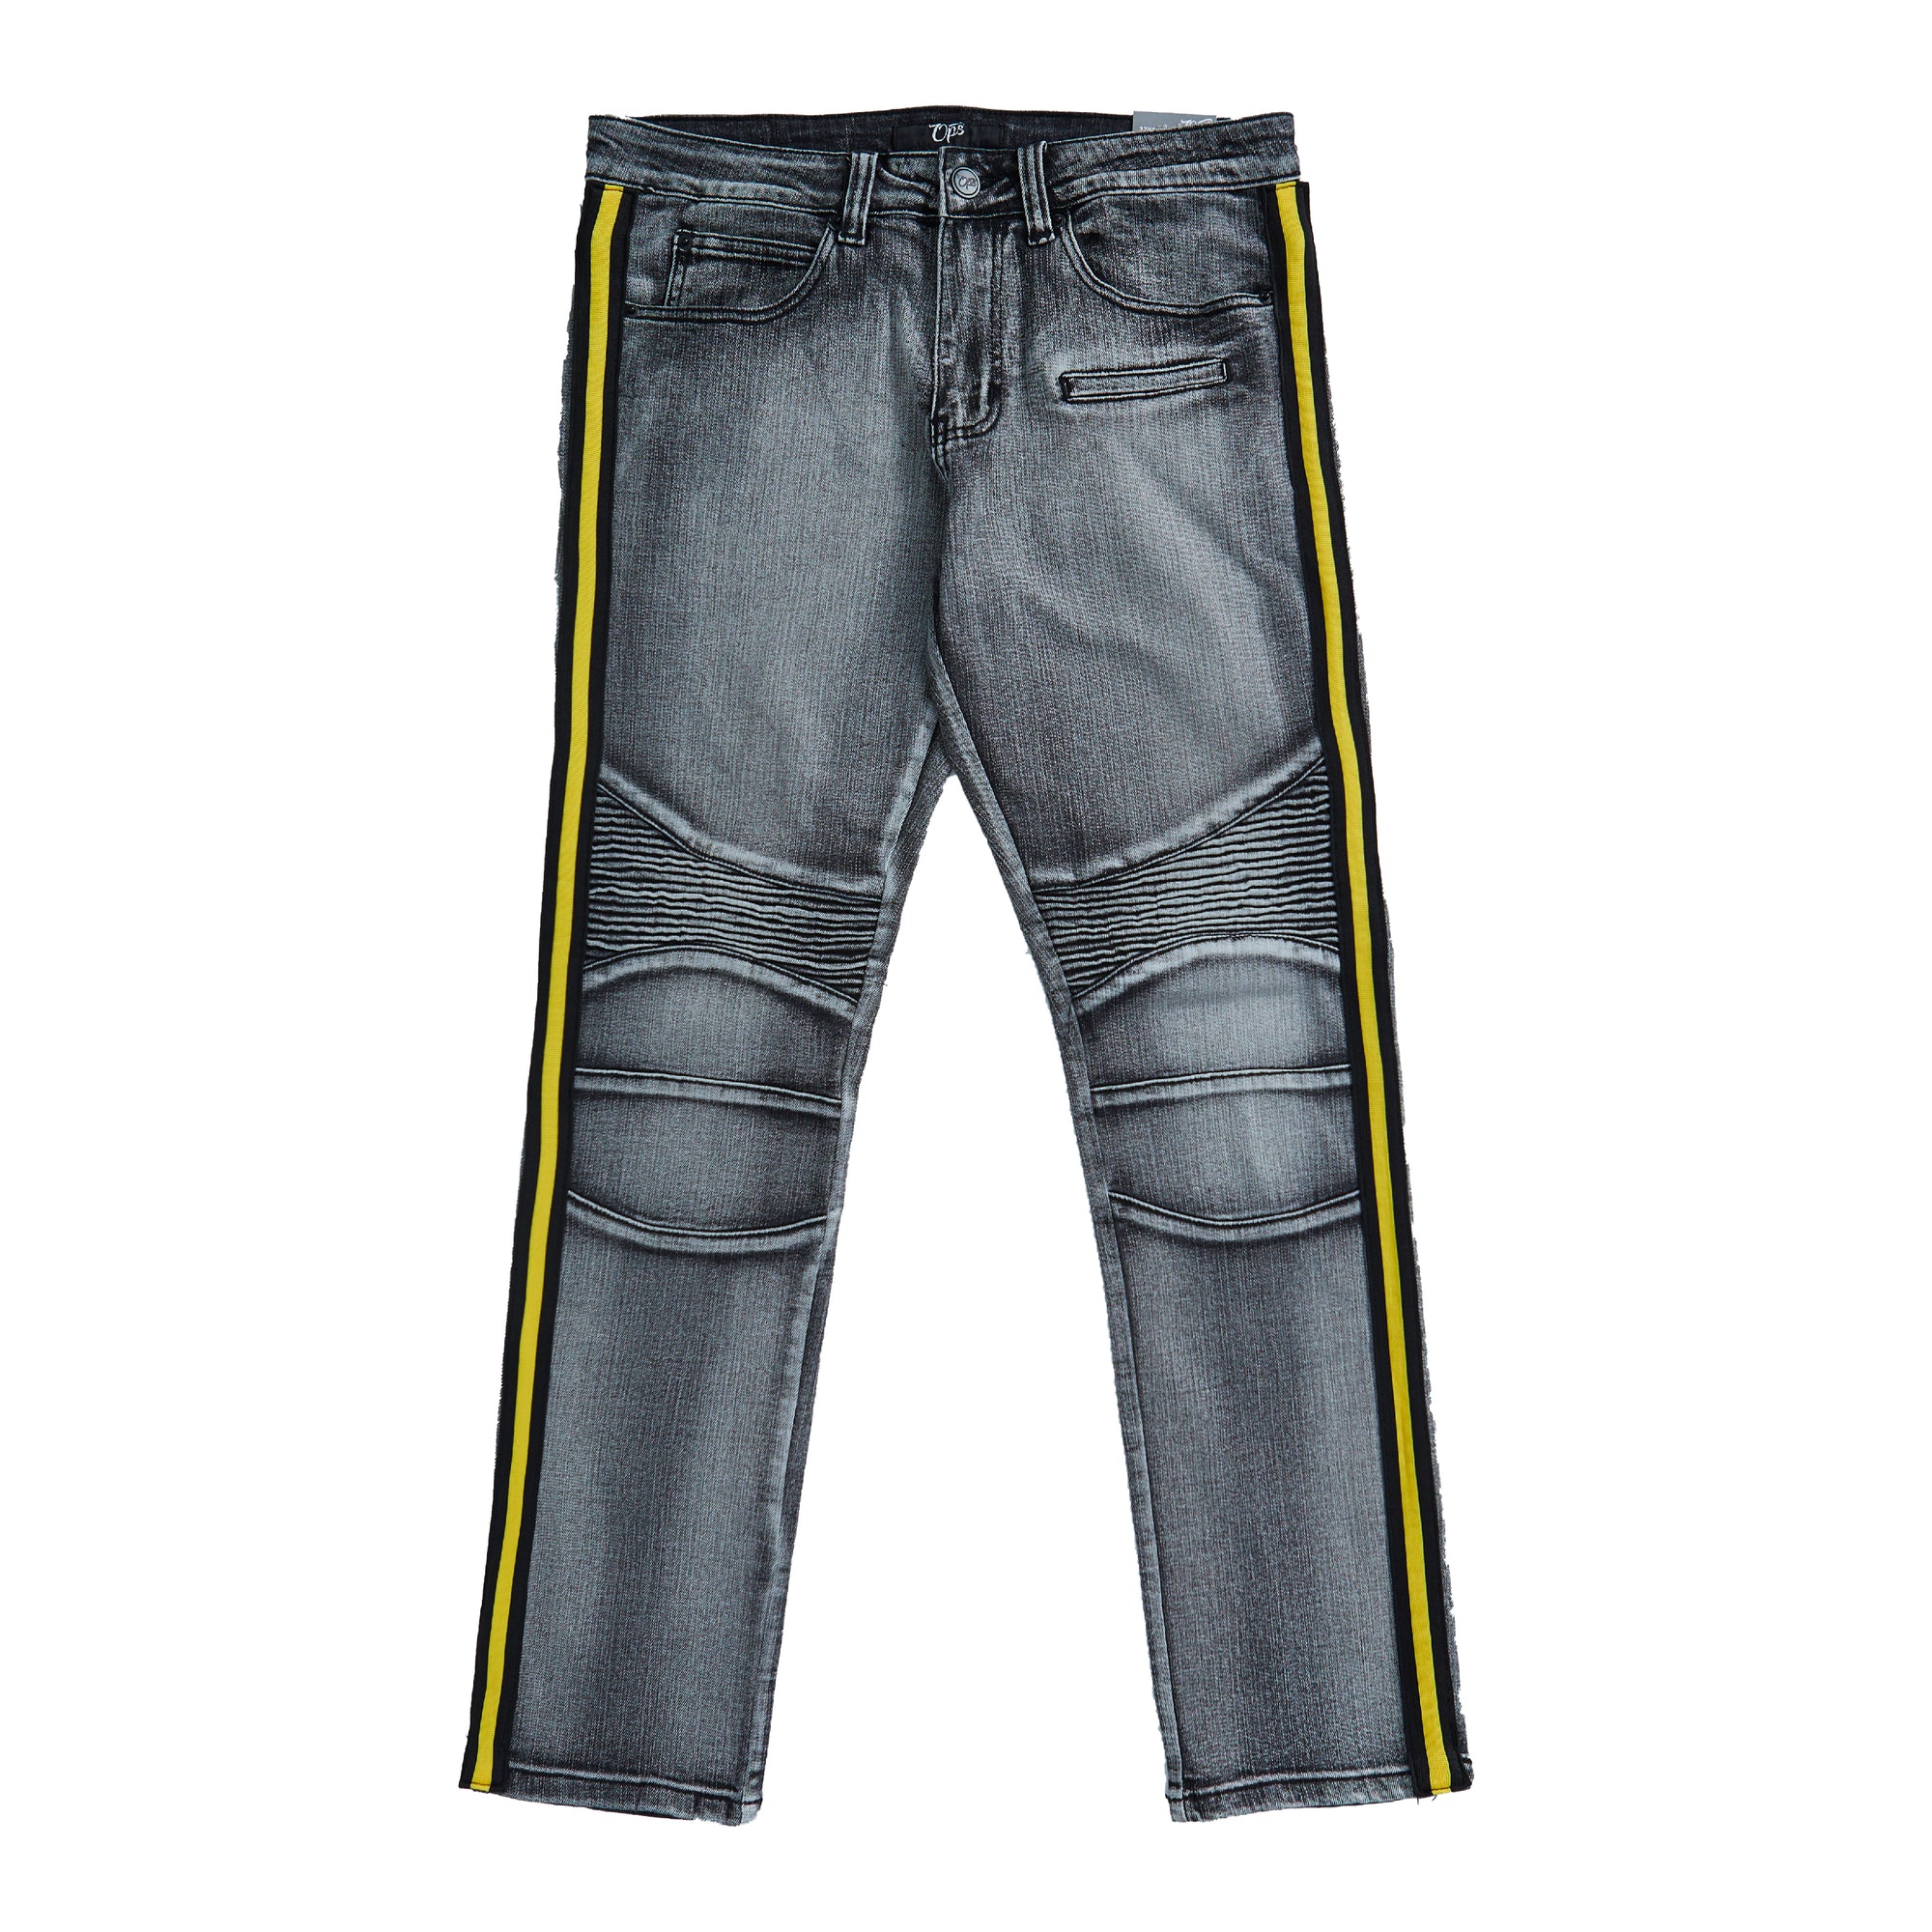 Premium Striped Moto Jean Pants (Washed Black/Yellow)